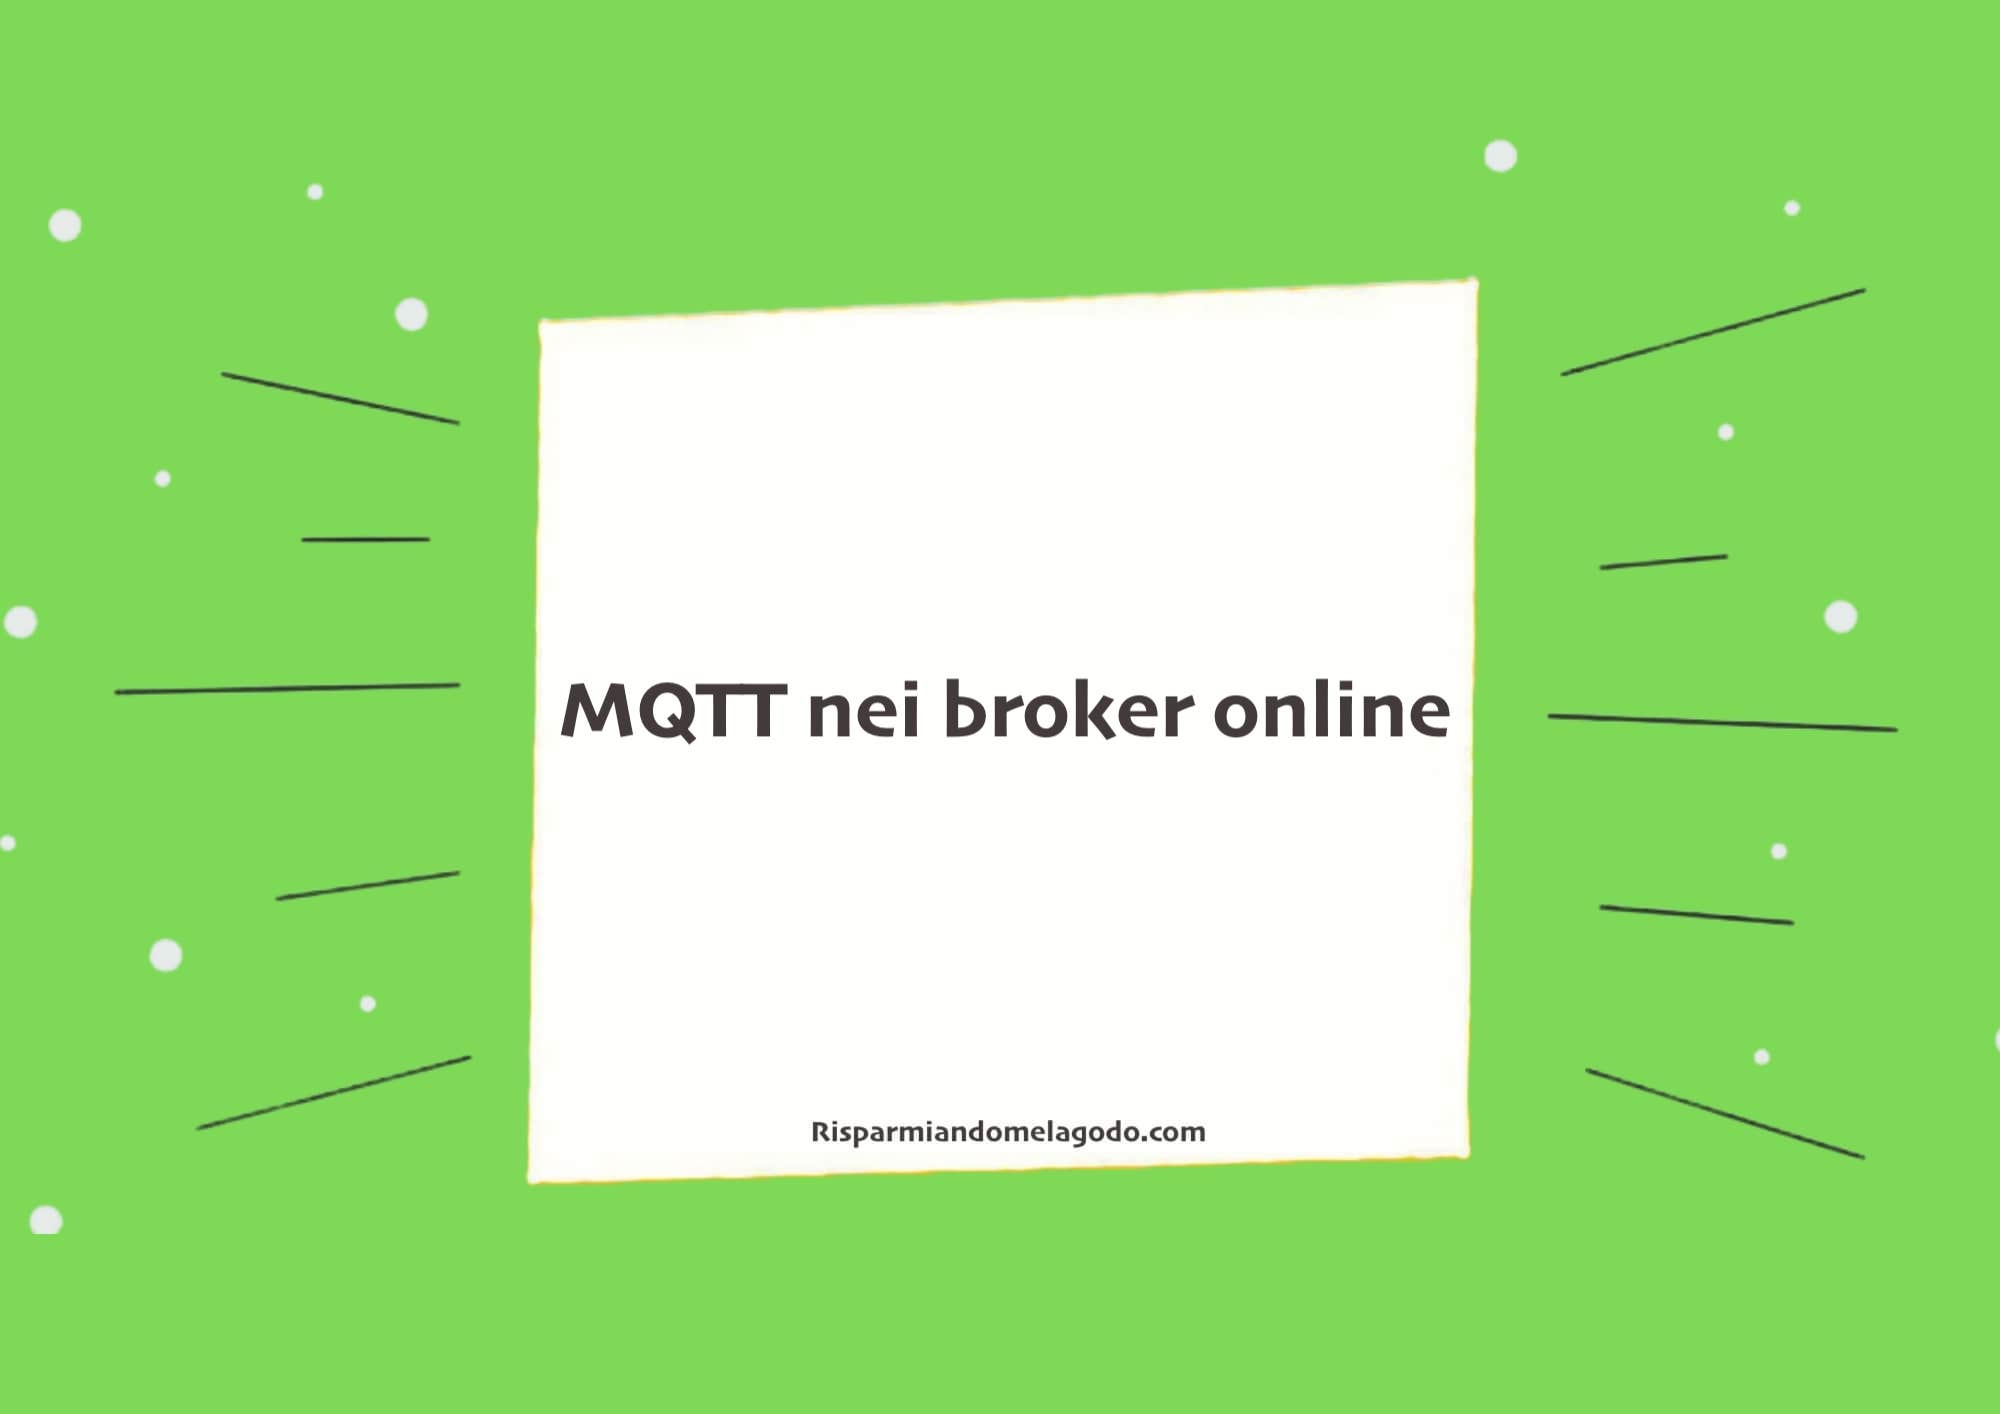 MQTT nei broker online